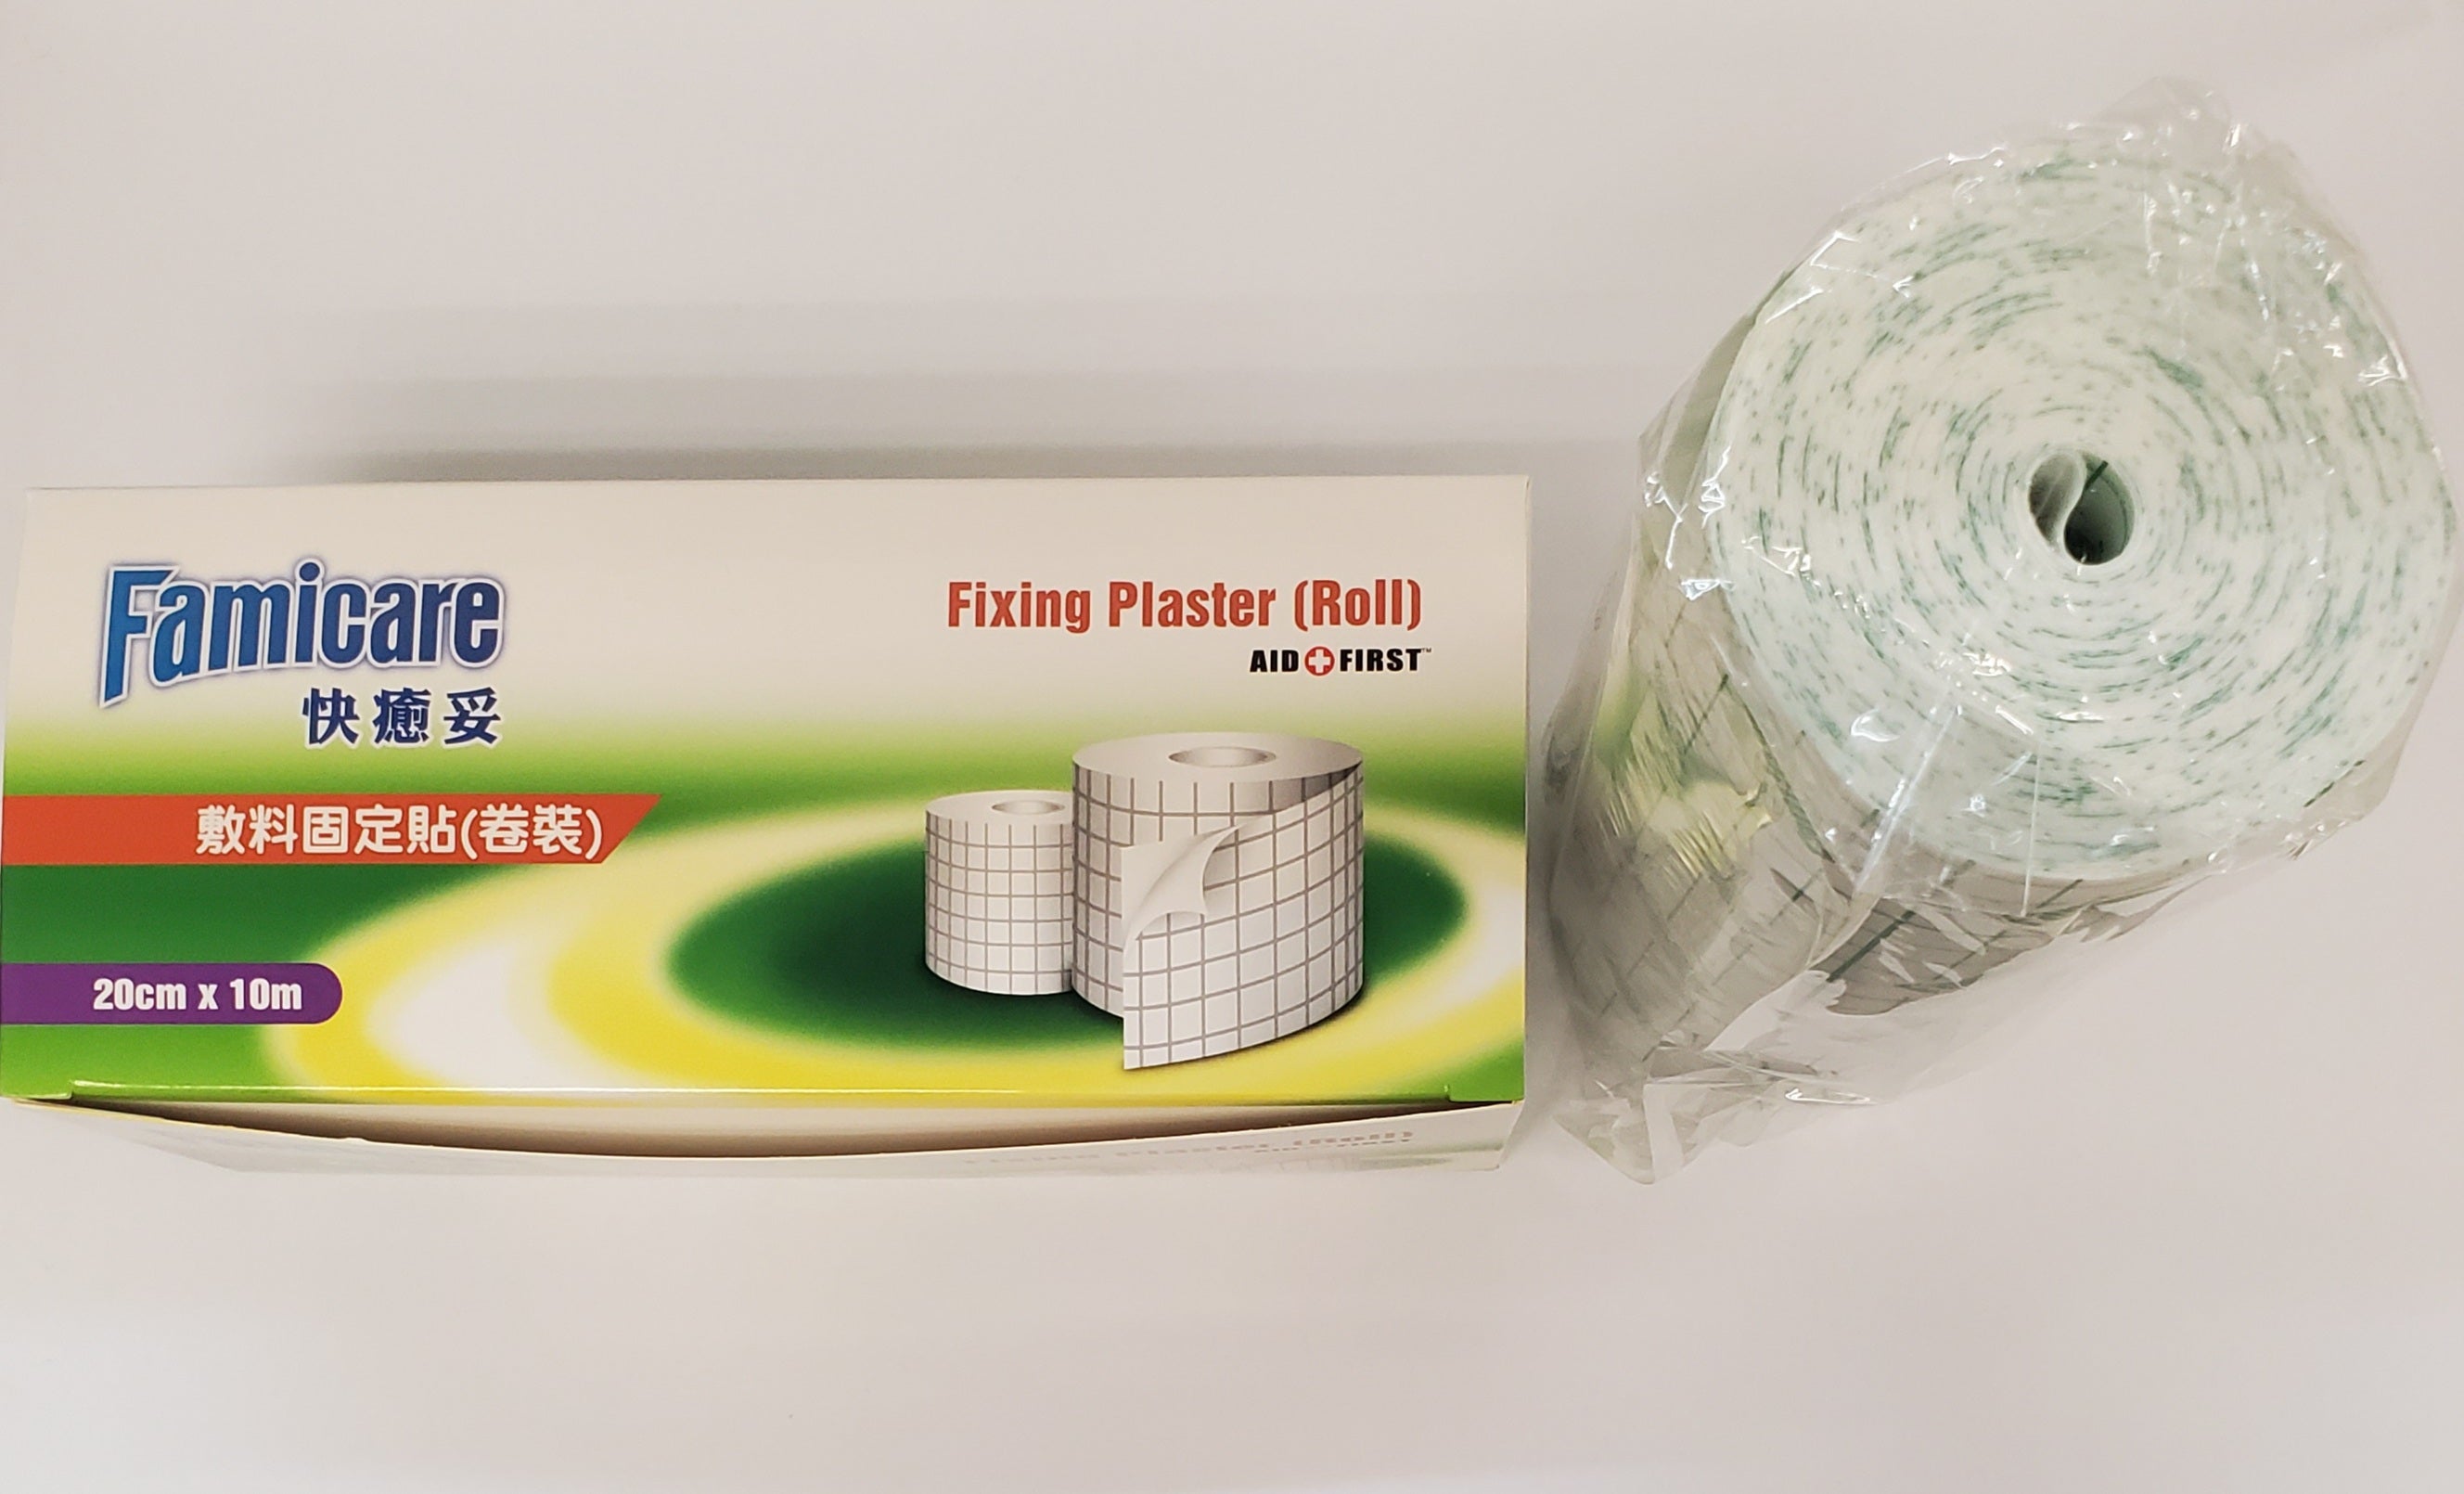 Famicare Fixing Plaster (Roll)